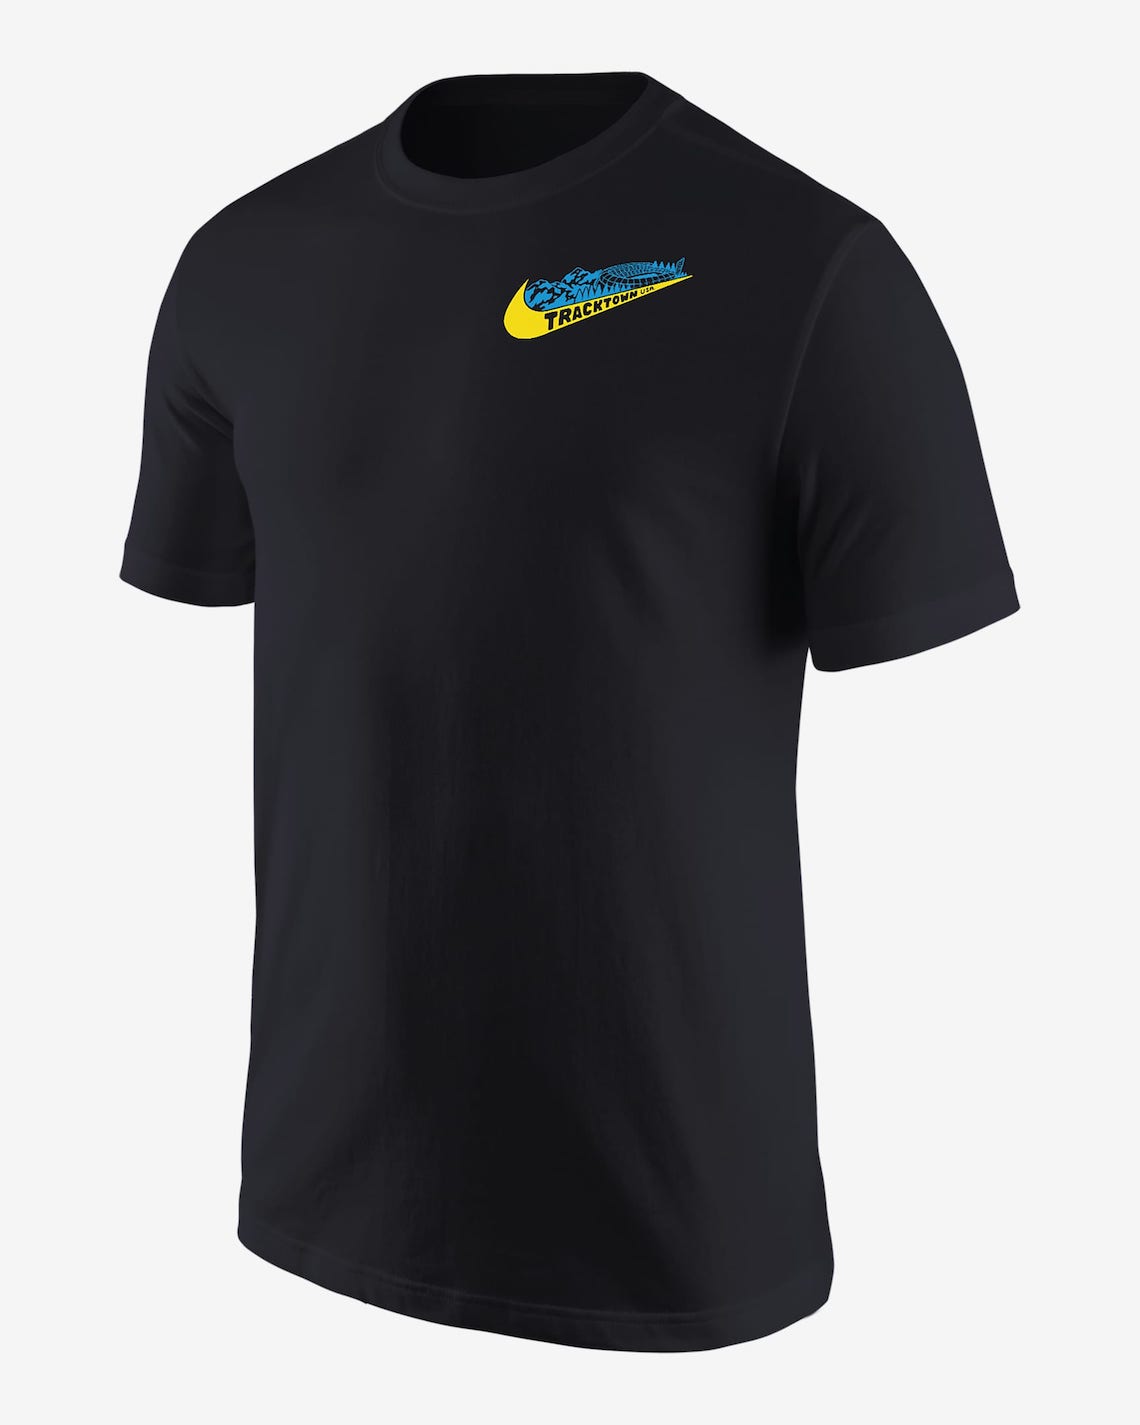 Nike Hayward Field Collection 2020 11